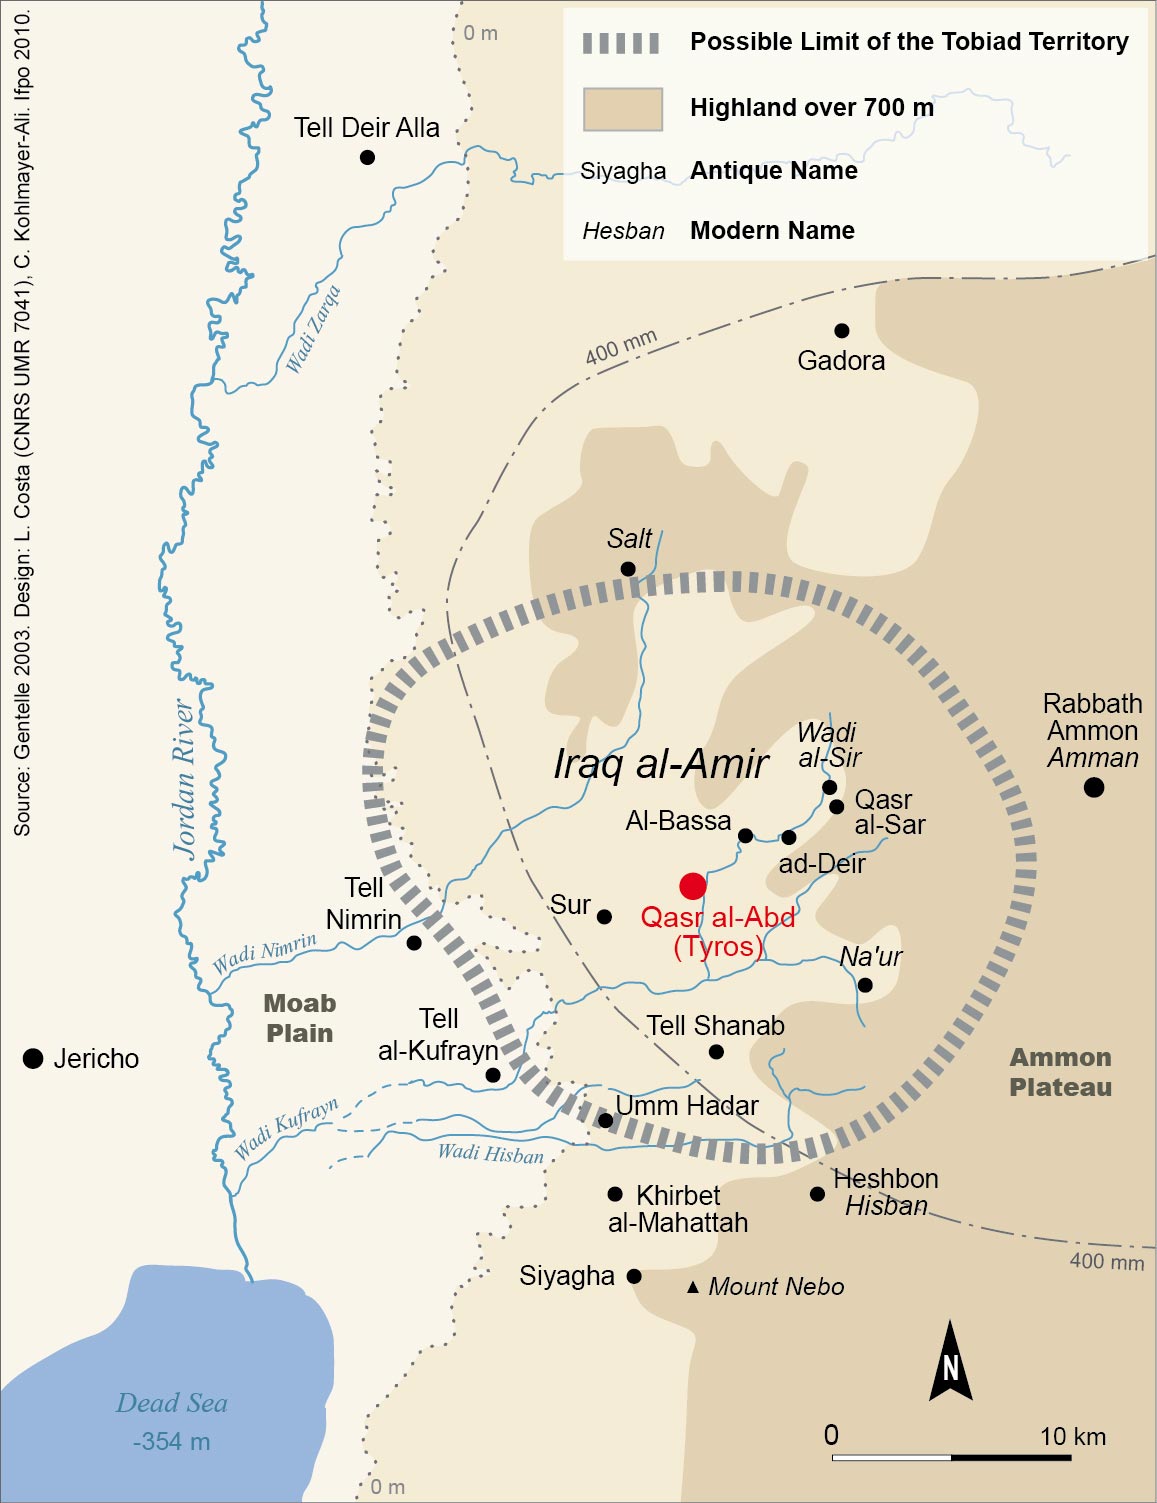 Iraq al-Amir and the Tobiad Territory-3.jpg